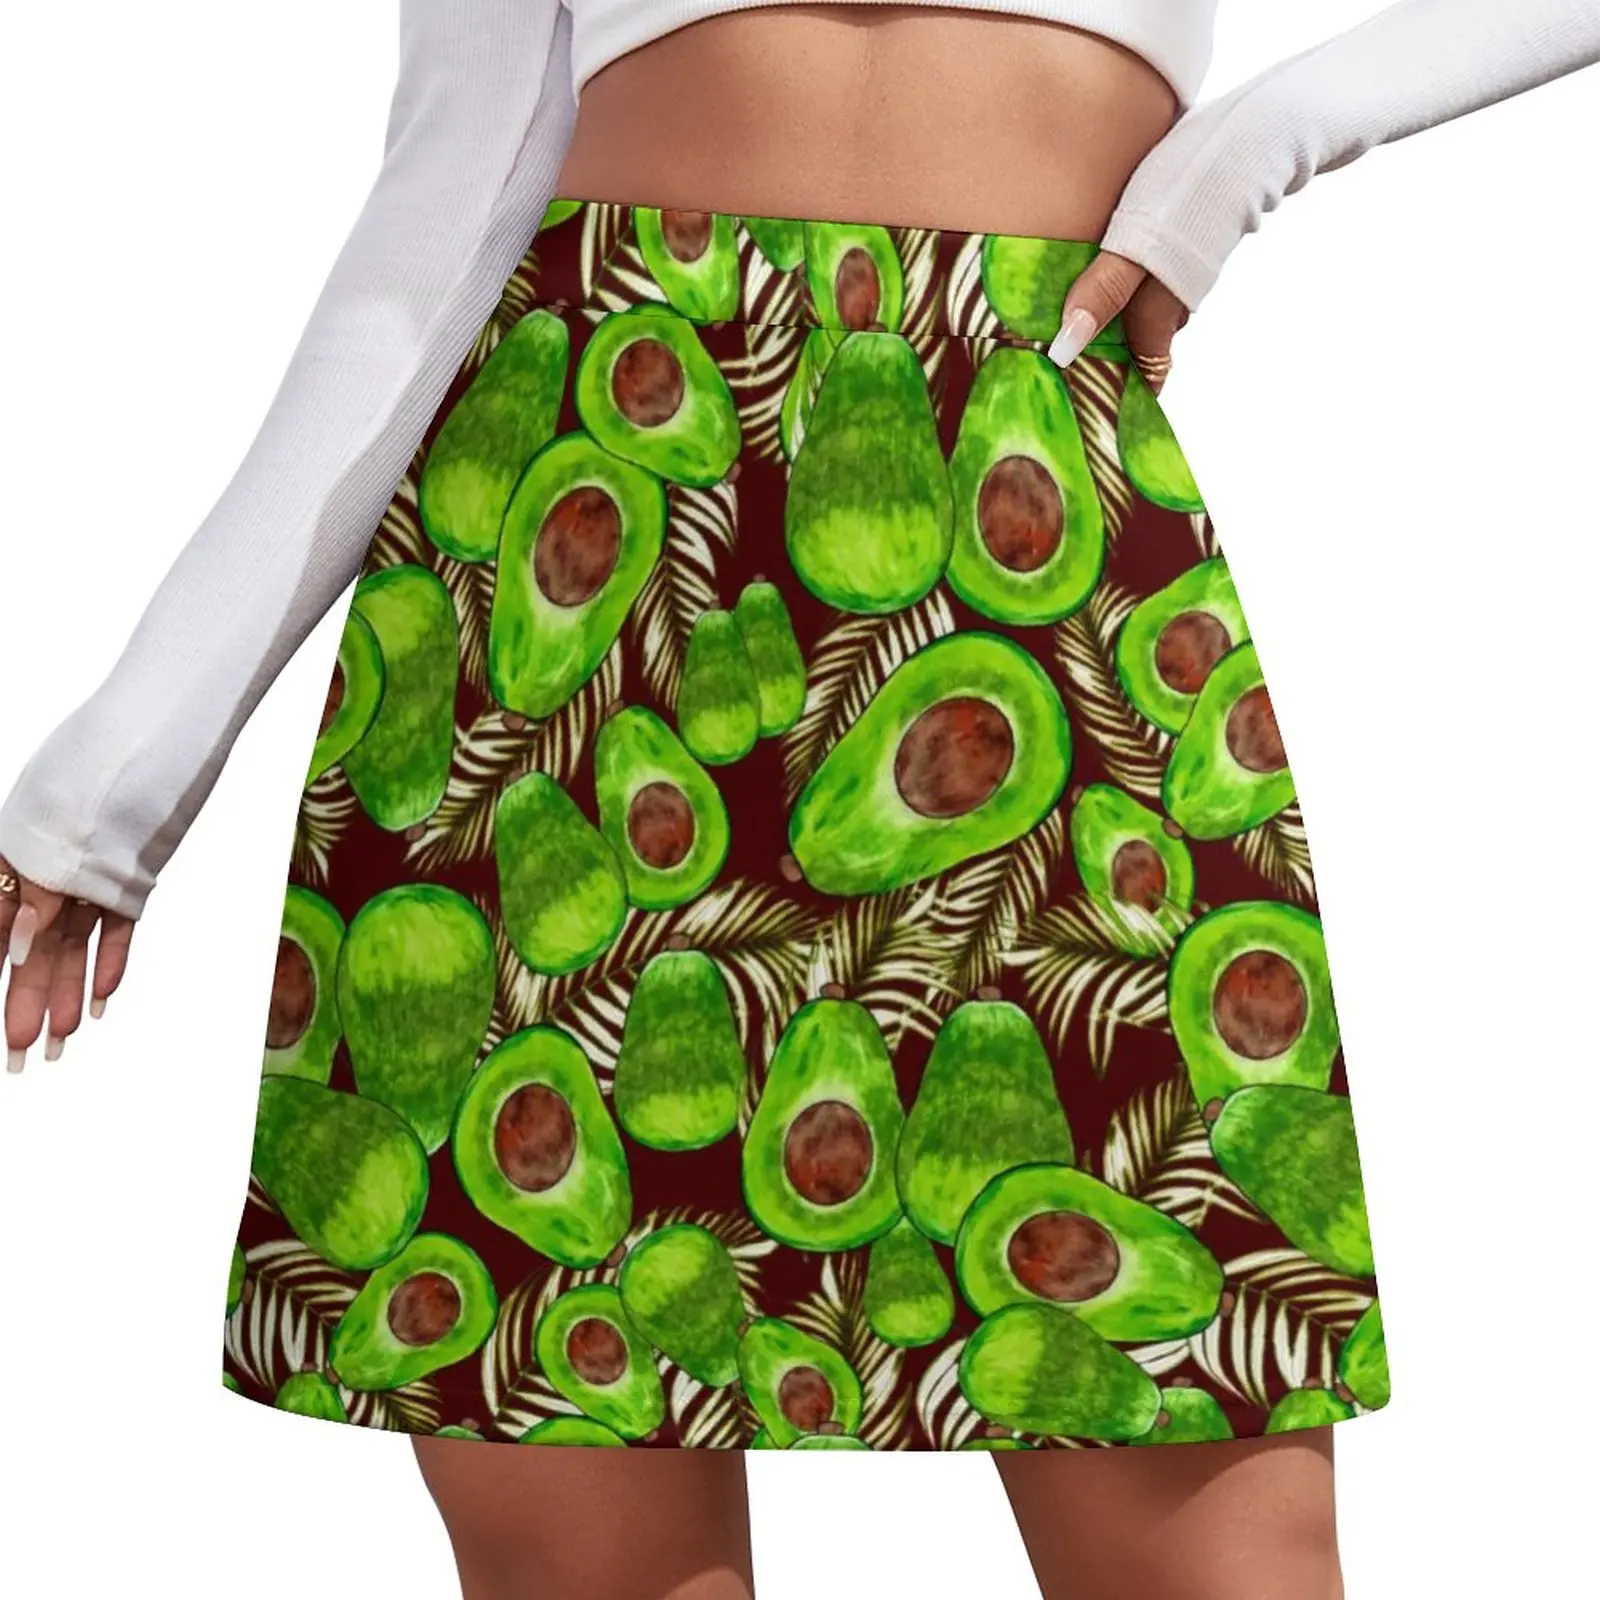 

Avocado Salad Skirt Women Green Fruit Print Vintage Mini Skirts Summer Fashion High Waist Graphic Oversize Casual A-line Skirt